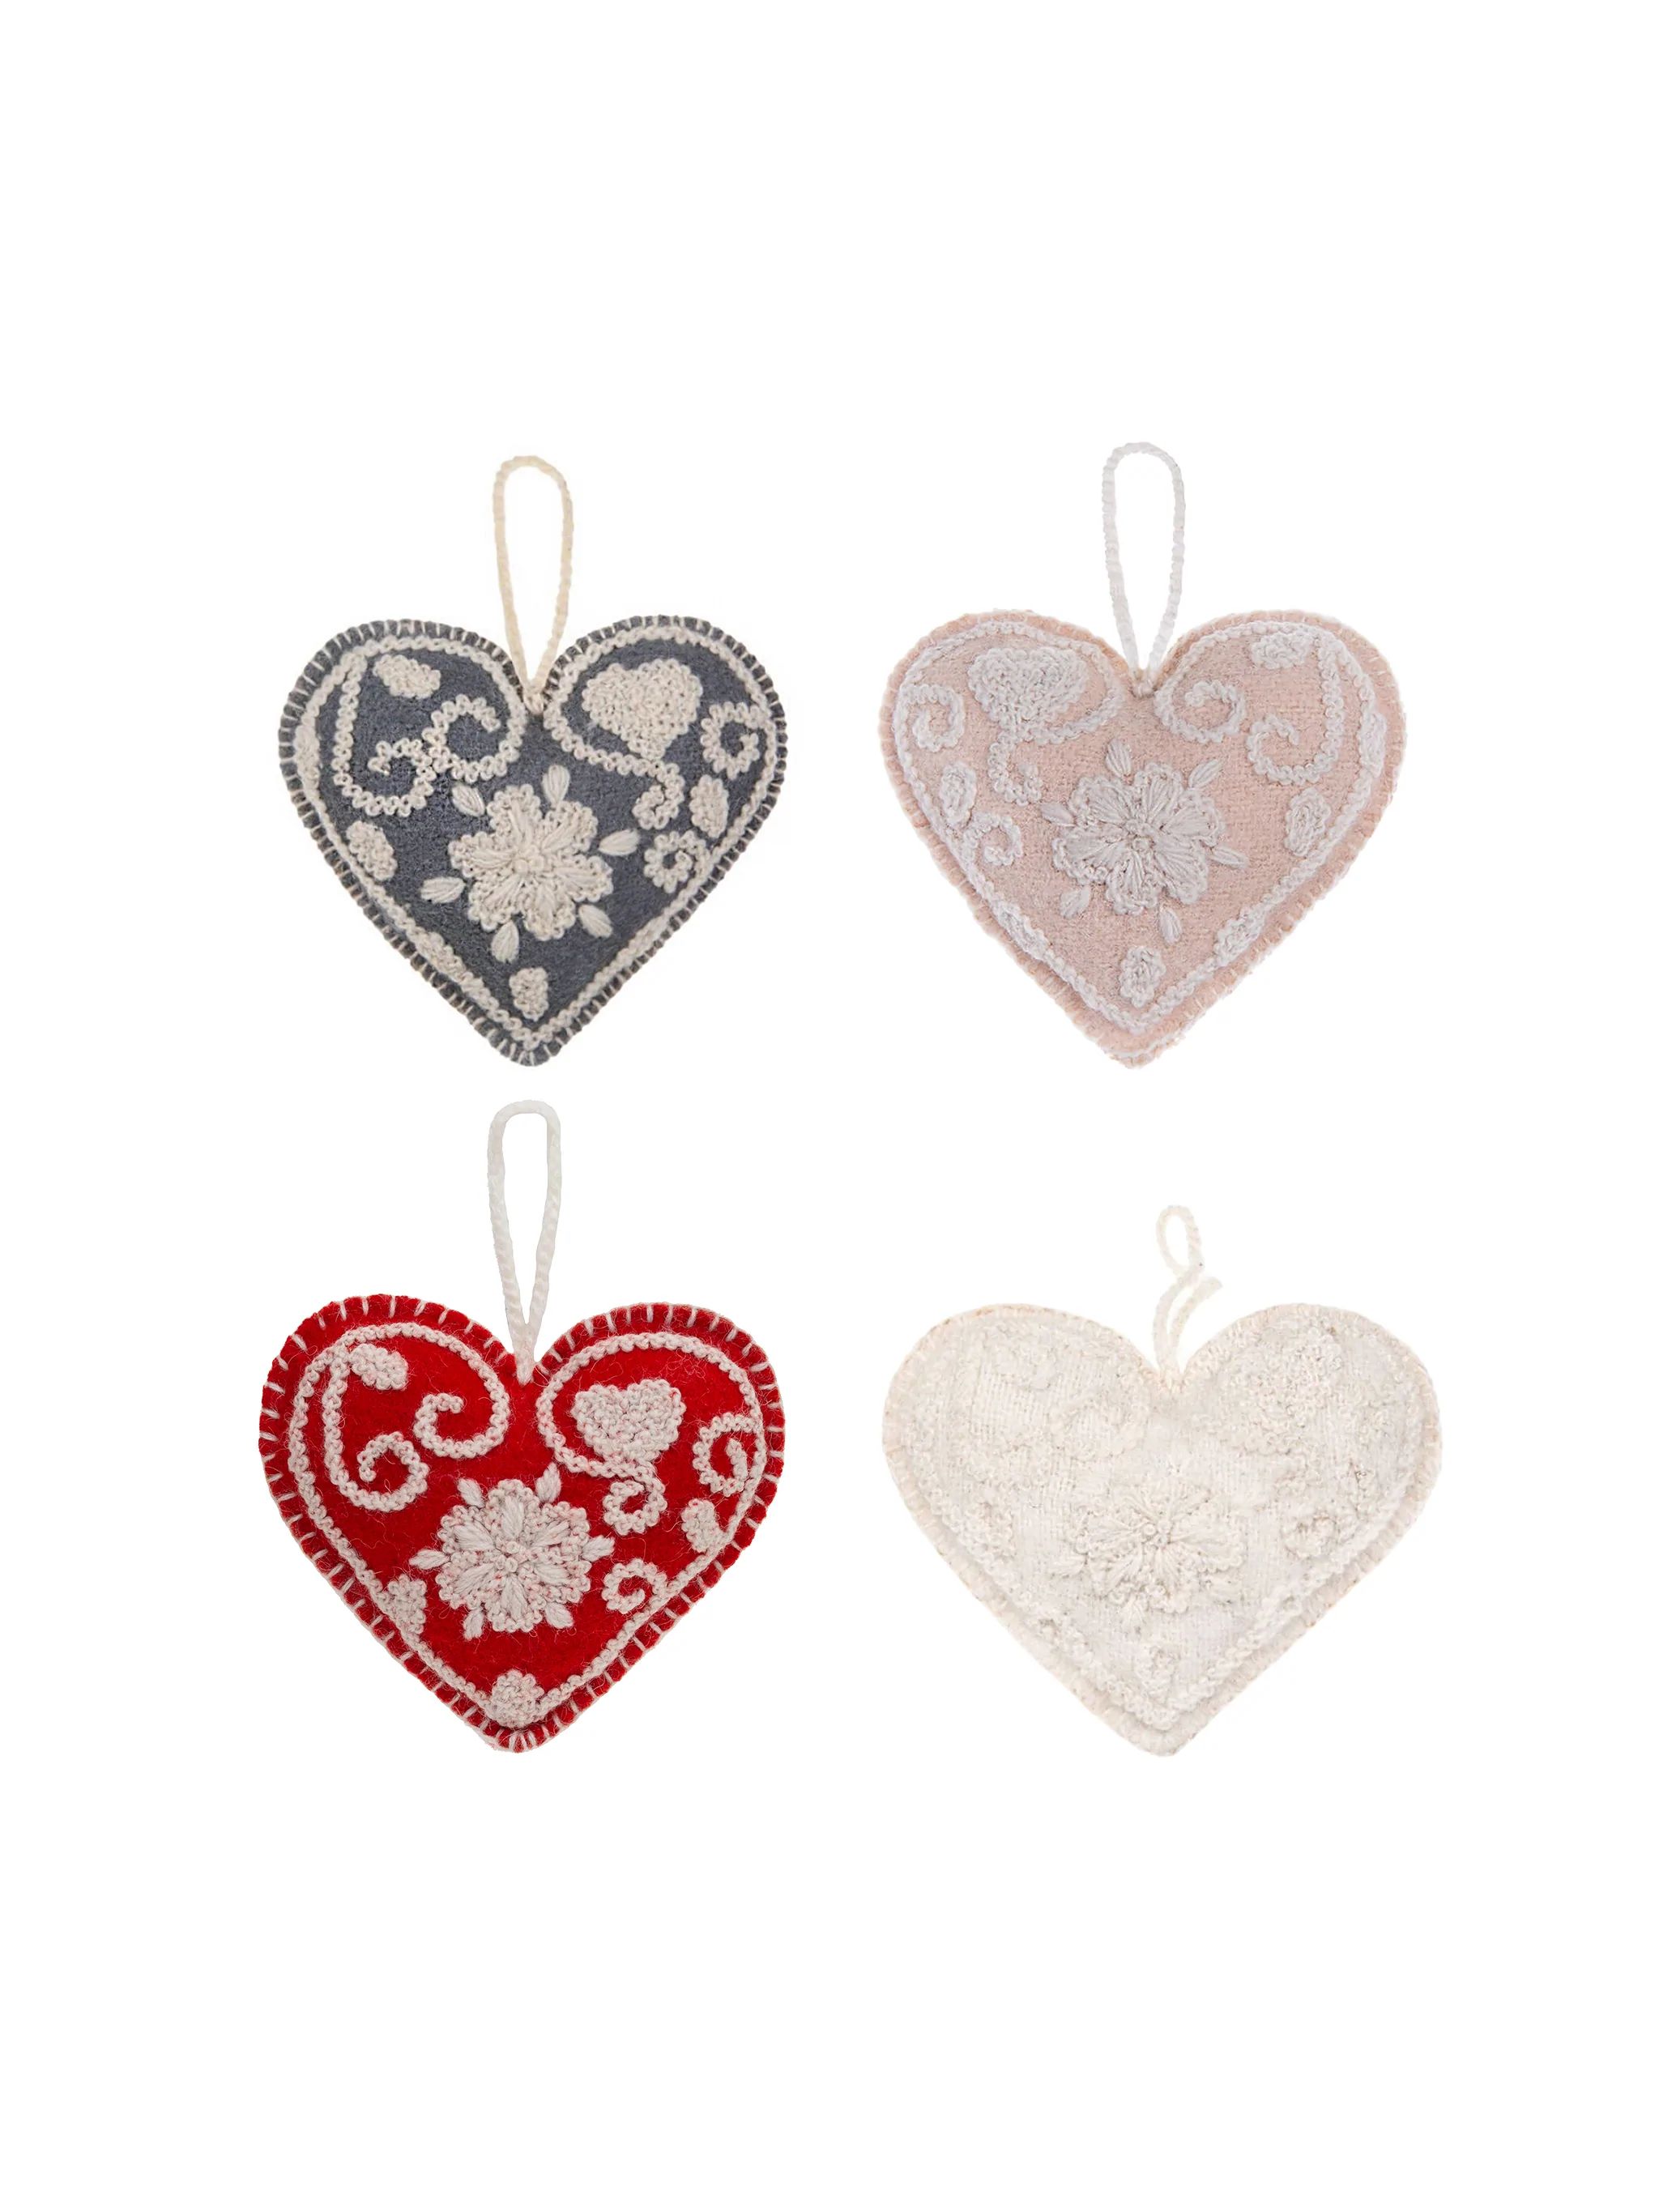 Heart Wool Felt Ornaments | Weston Table